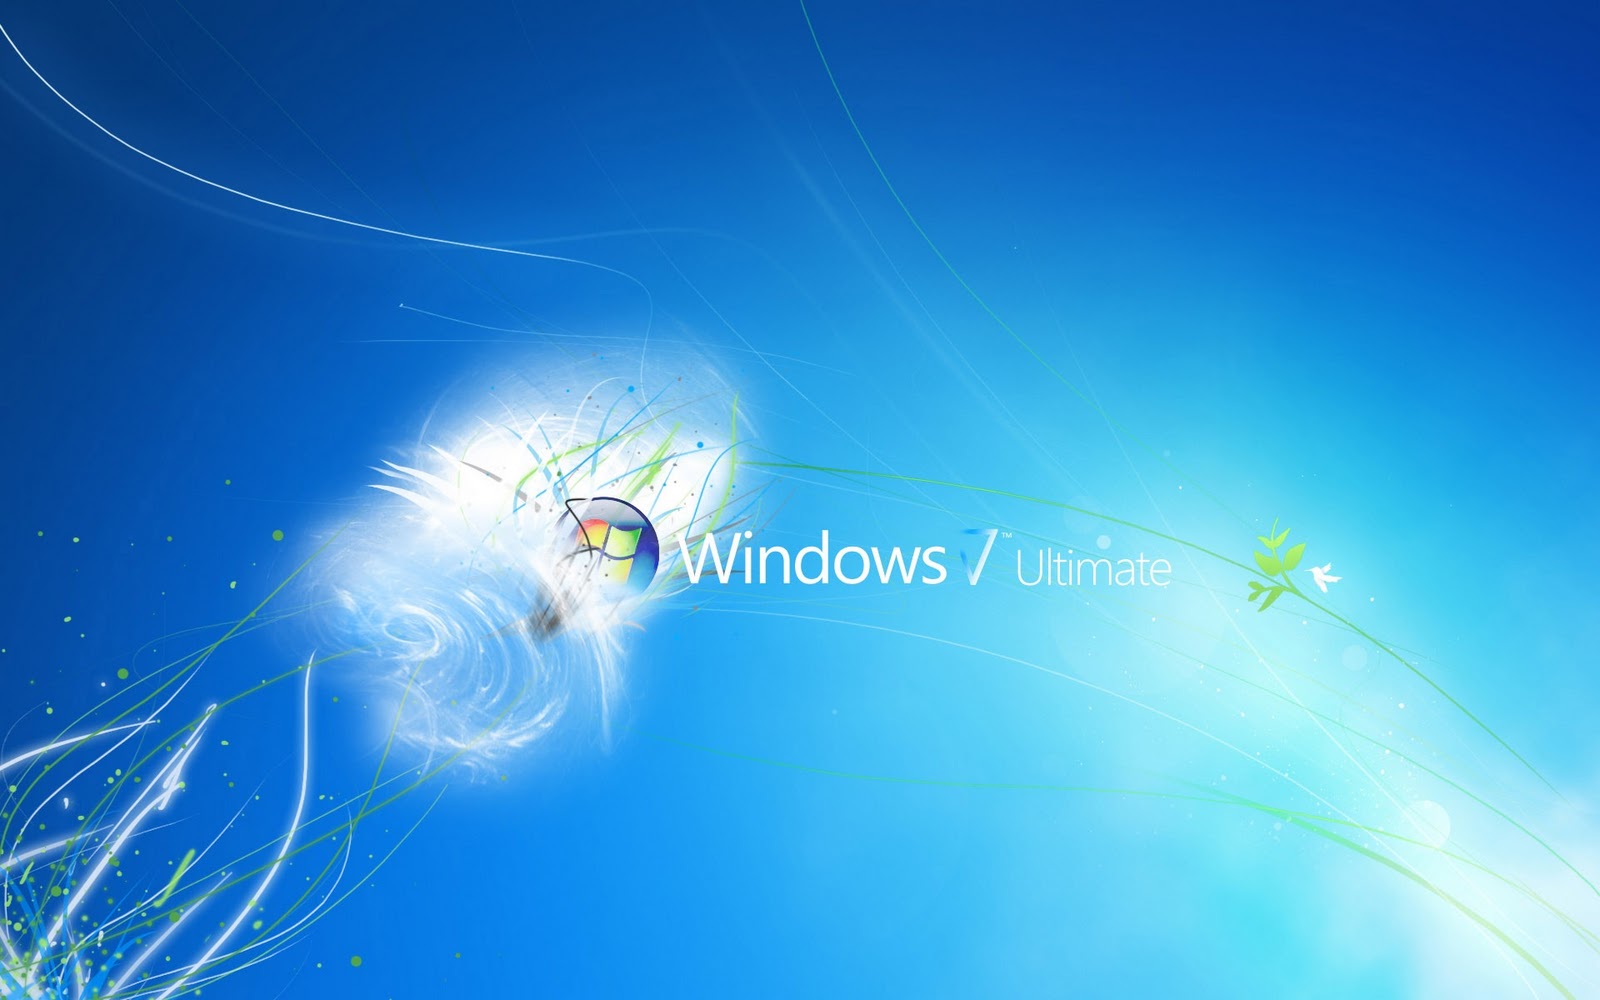 Windows 7 achtergronden windows 7 wallpapers 15jpg 1600x1000